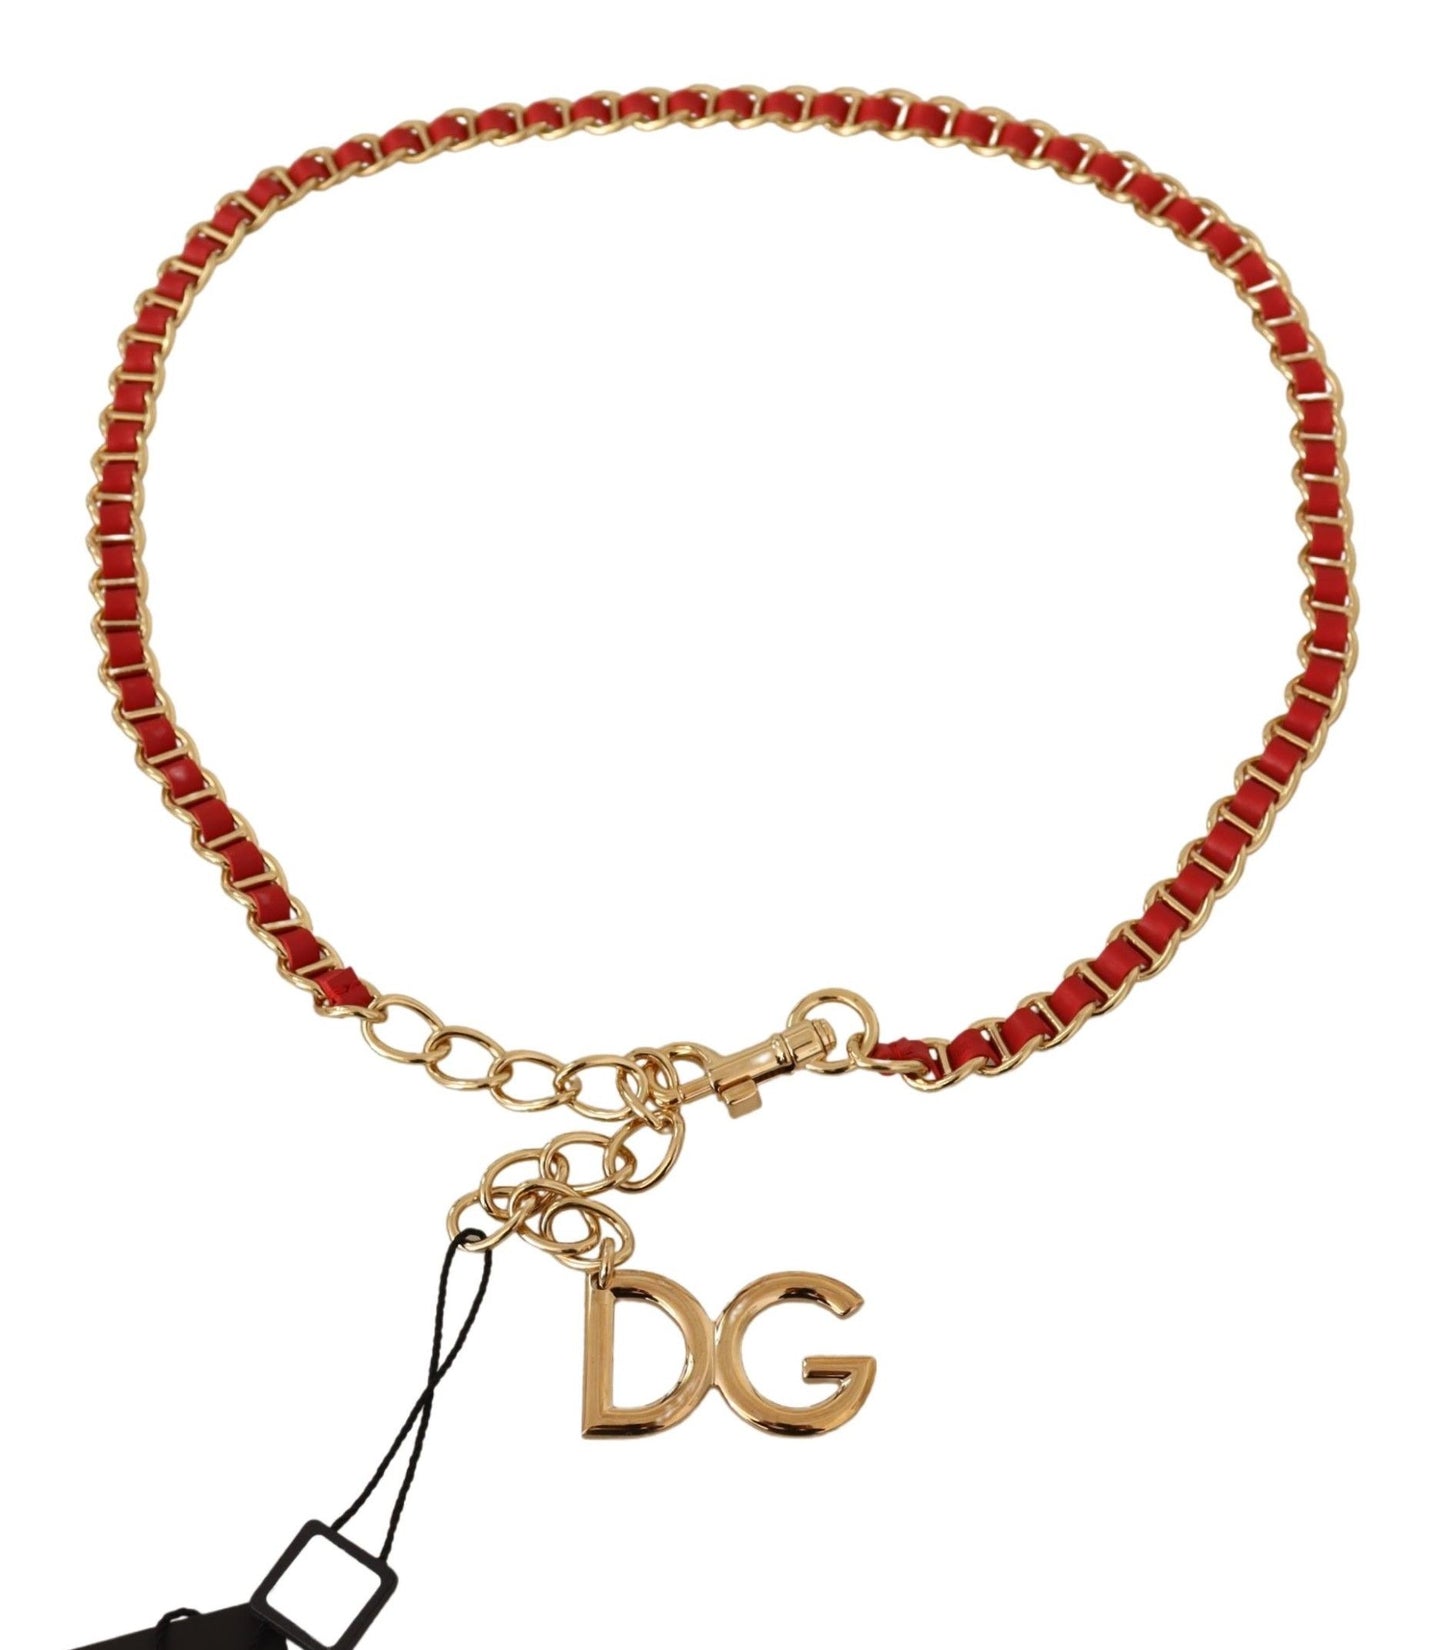 Elegant Red Leather Belt with Gold Tone DG Logo